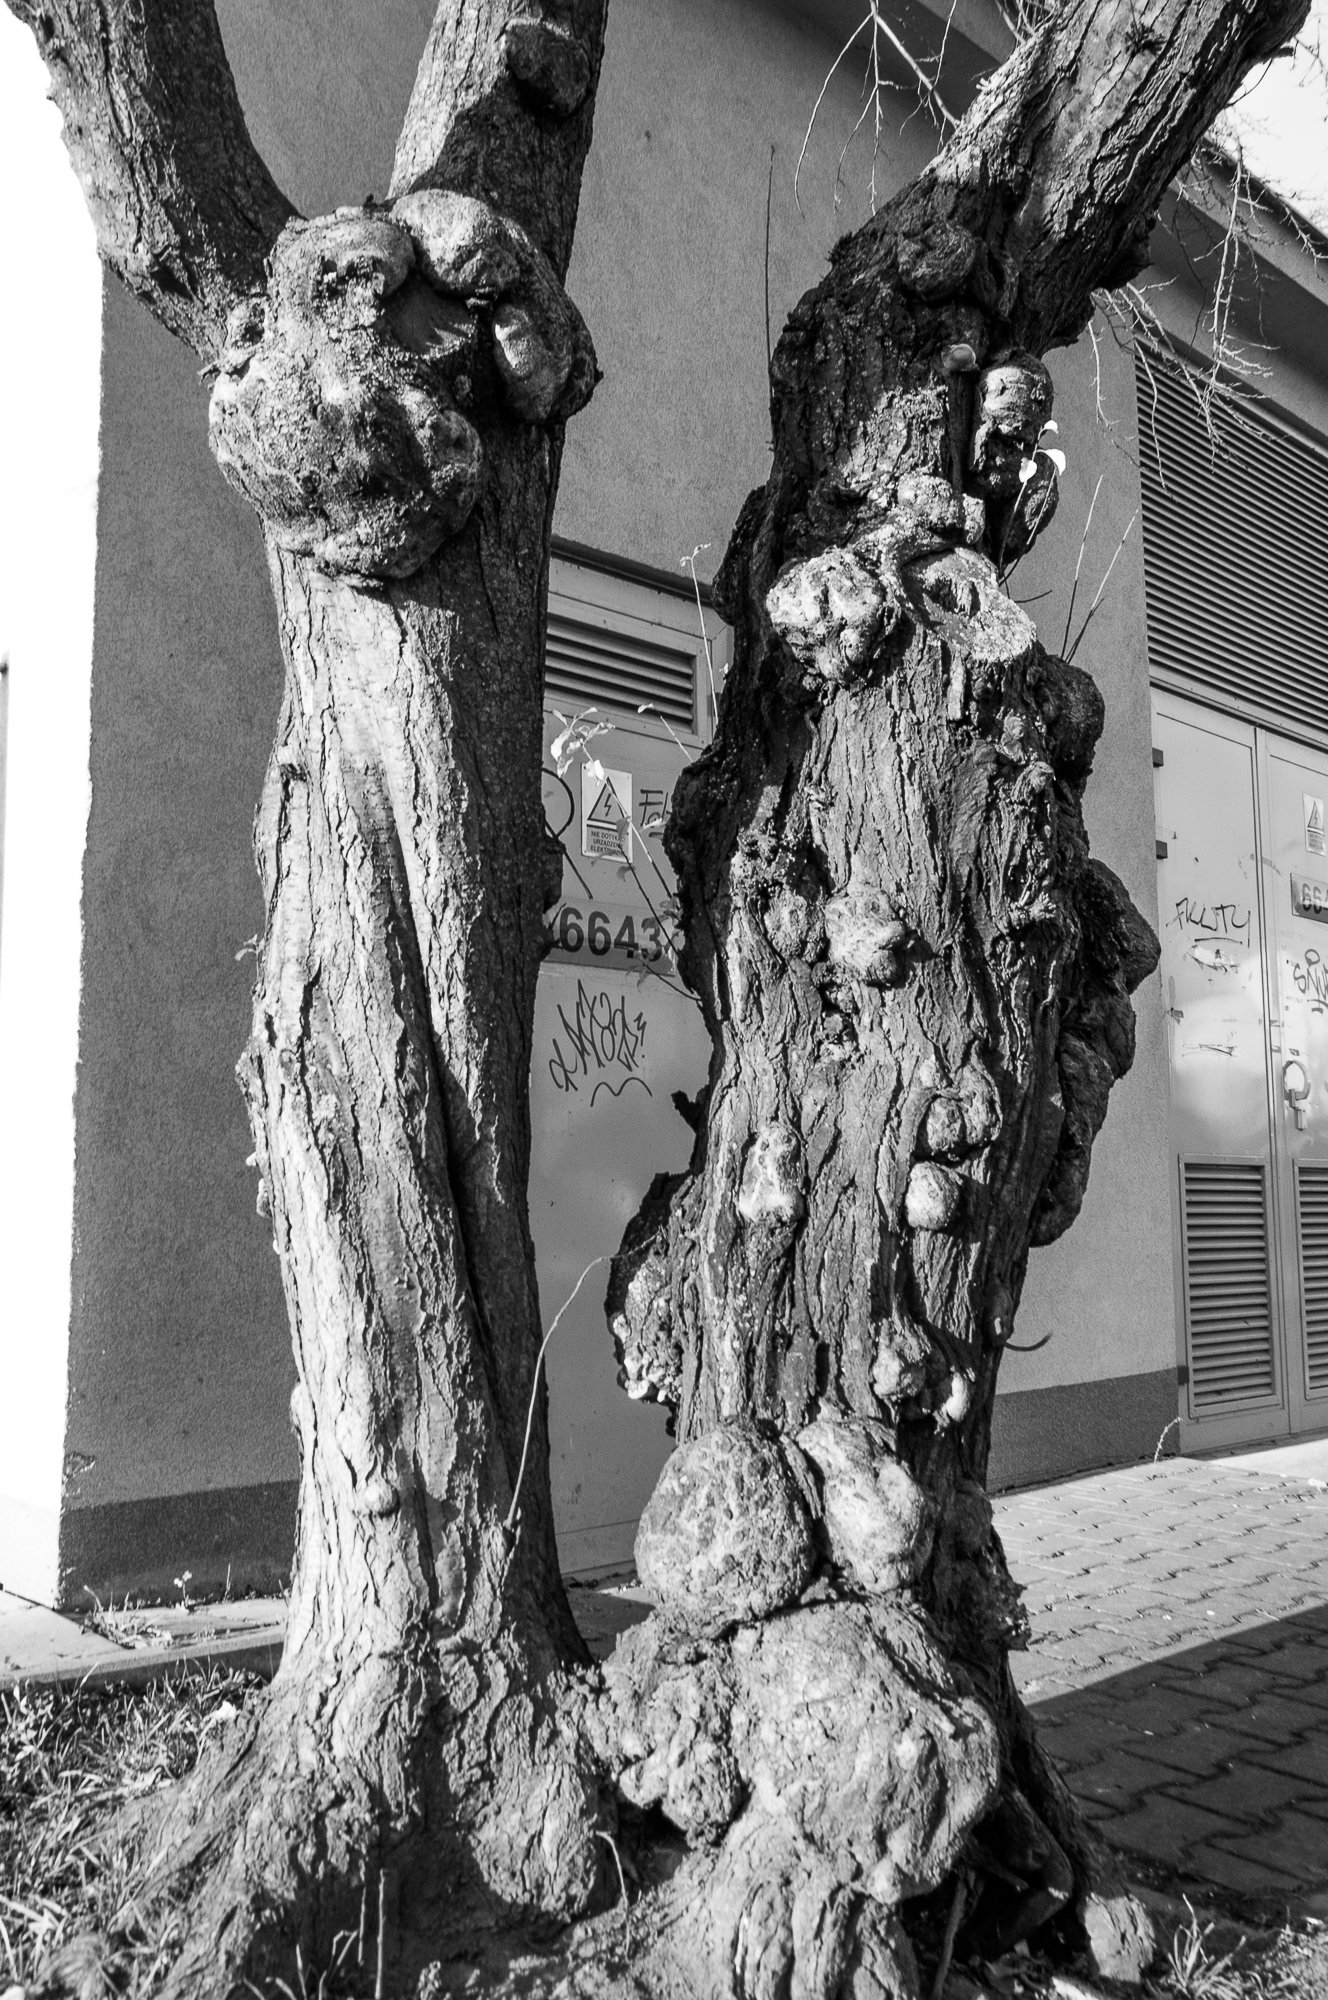 Adam Mazek Photography Warsaw (Warszawa) 2019. Post: "Stanley Kubrick." Minimalism. Abstraction. Creepy trees.